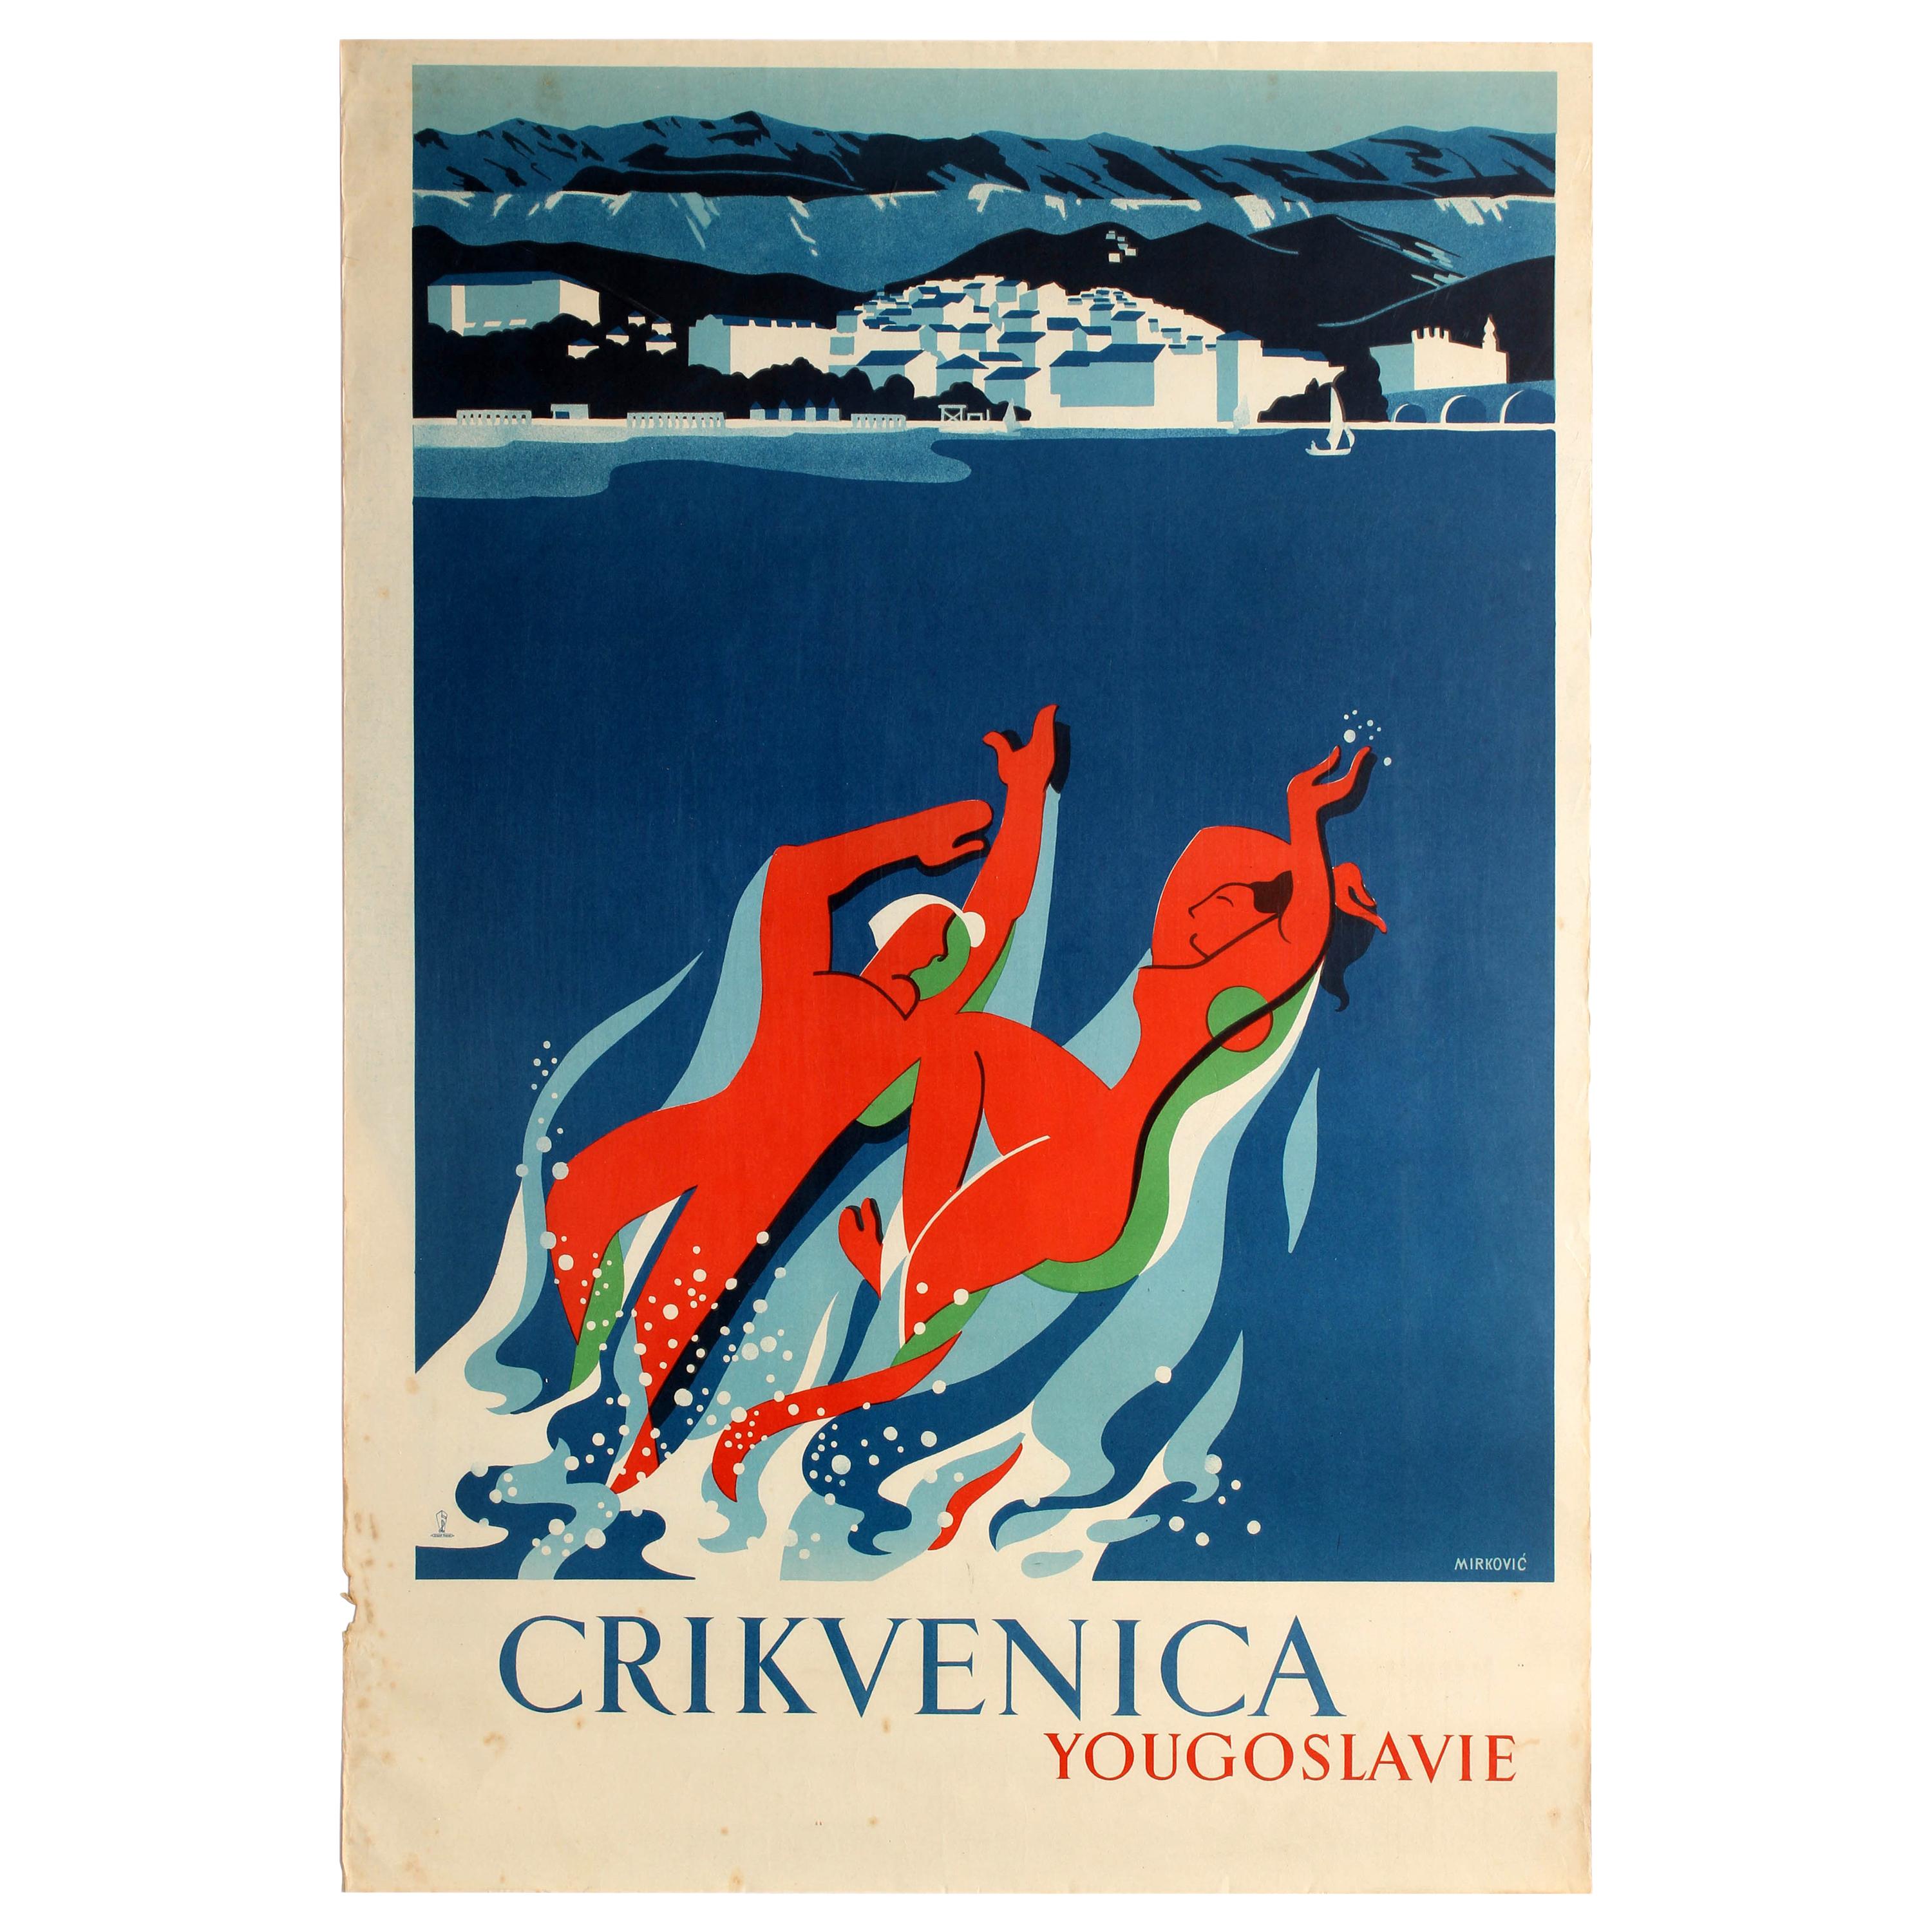 Original Vintage Travel Poster Crikvenica Yugoslavia Sea Coast Health Spa Resort